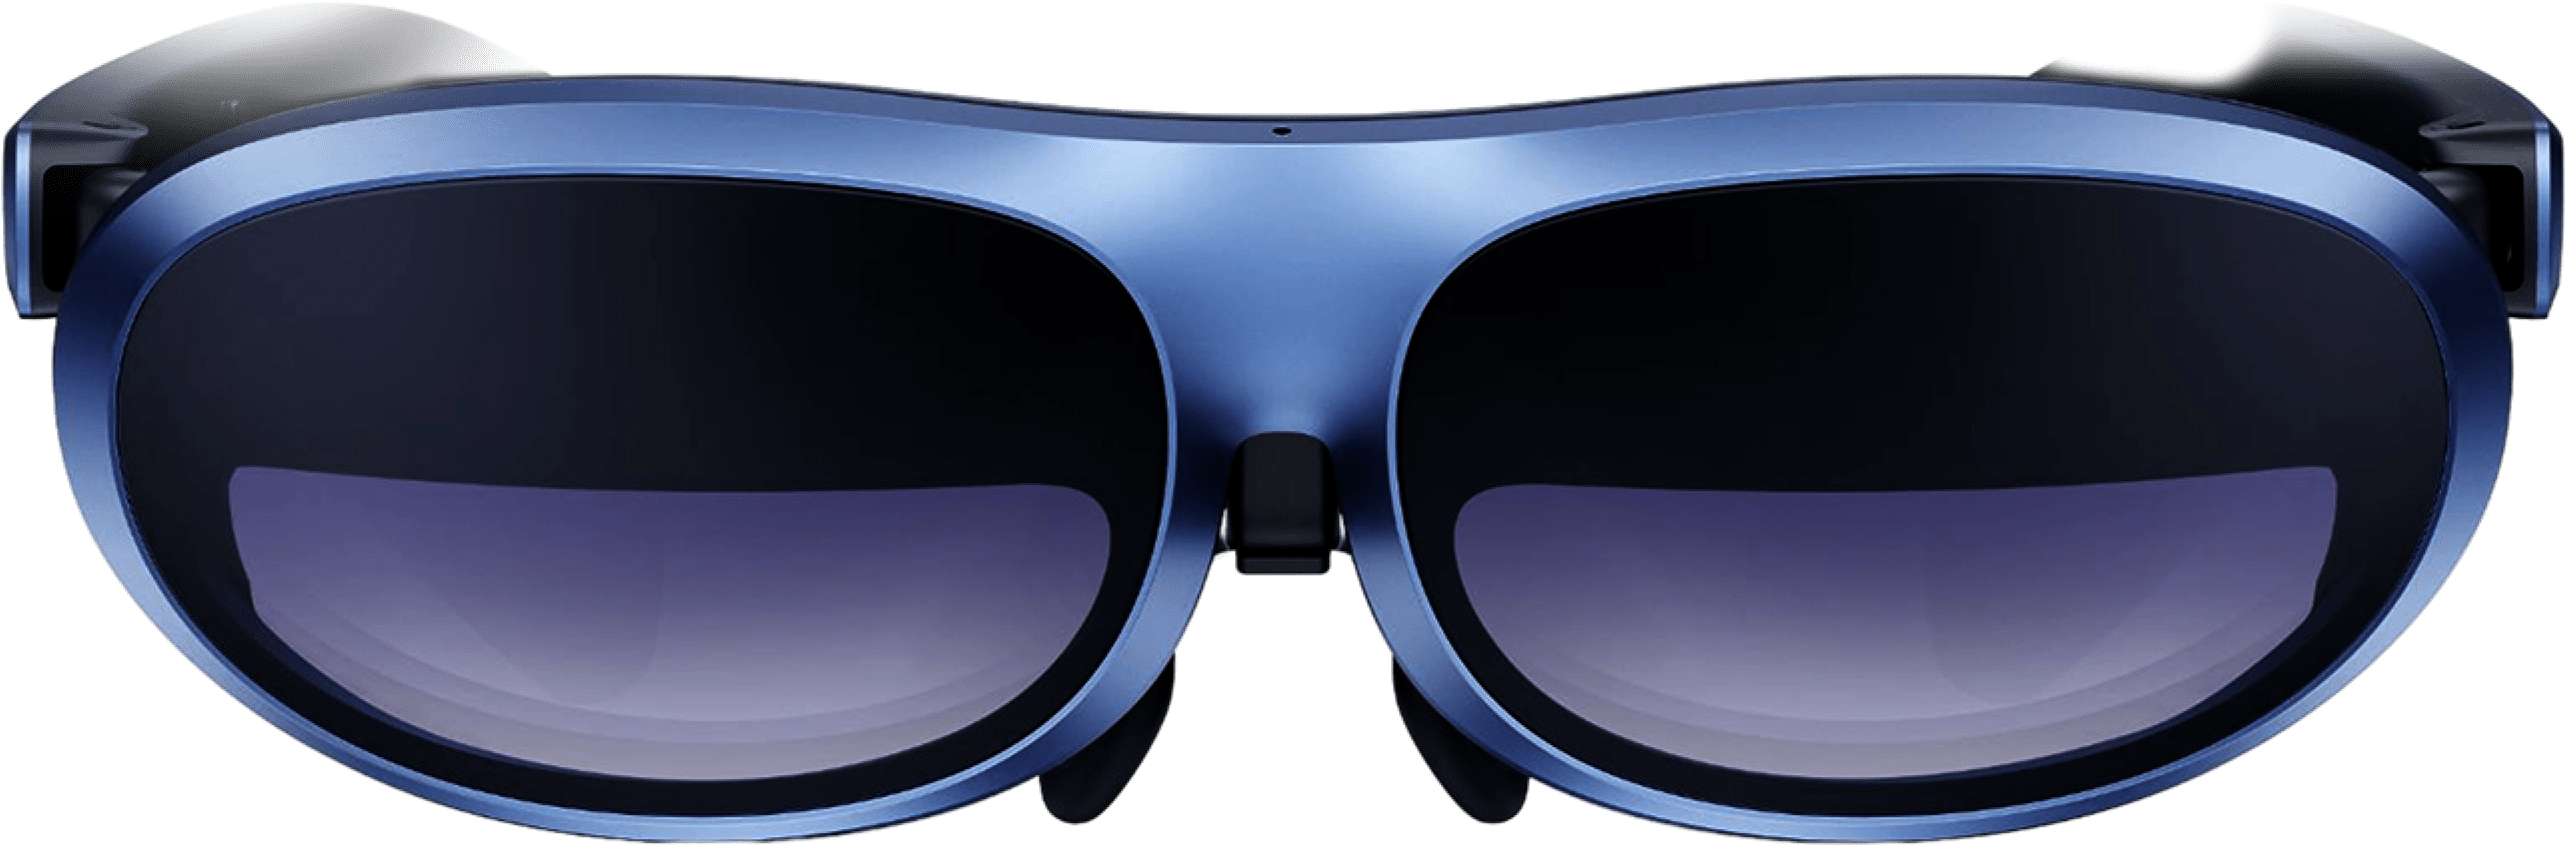 Rokid MAX smart glasses 2023